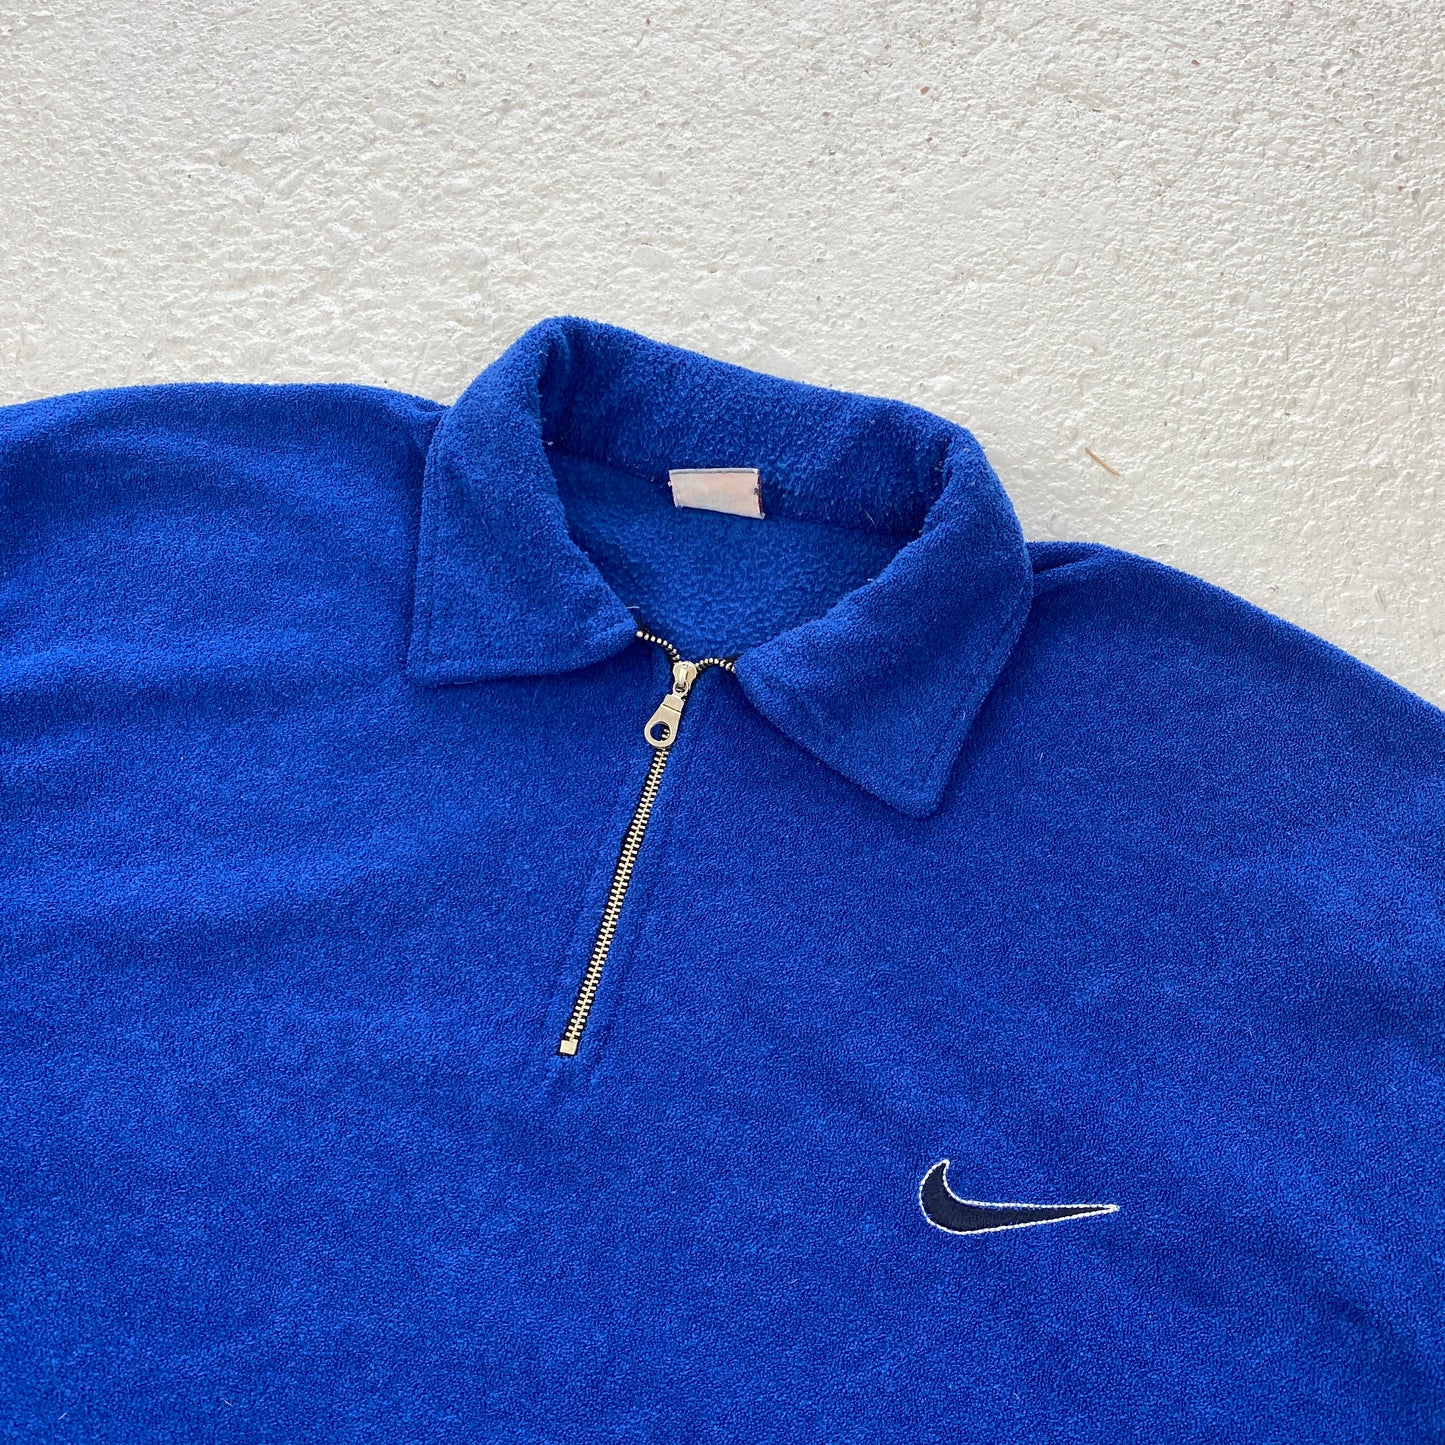 Nike RARE 1/4 zip fleece sweater (L)